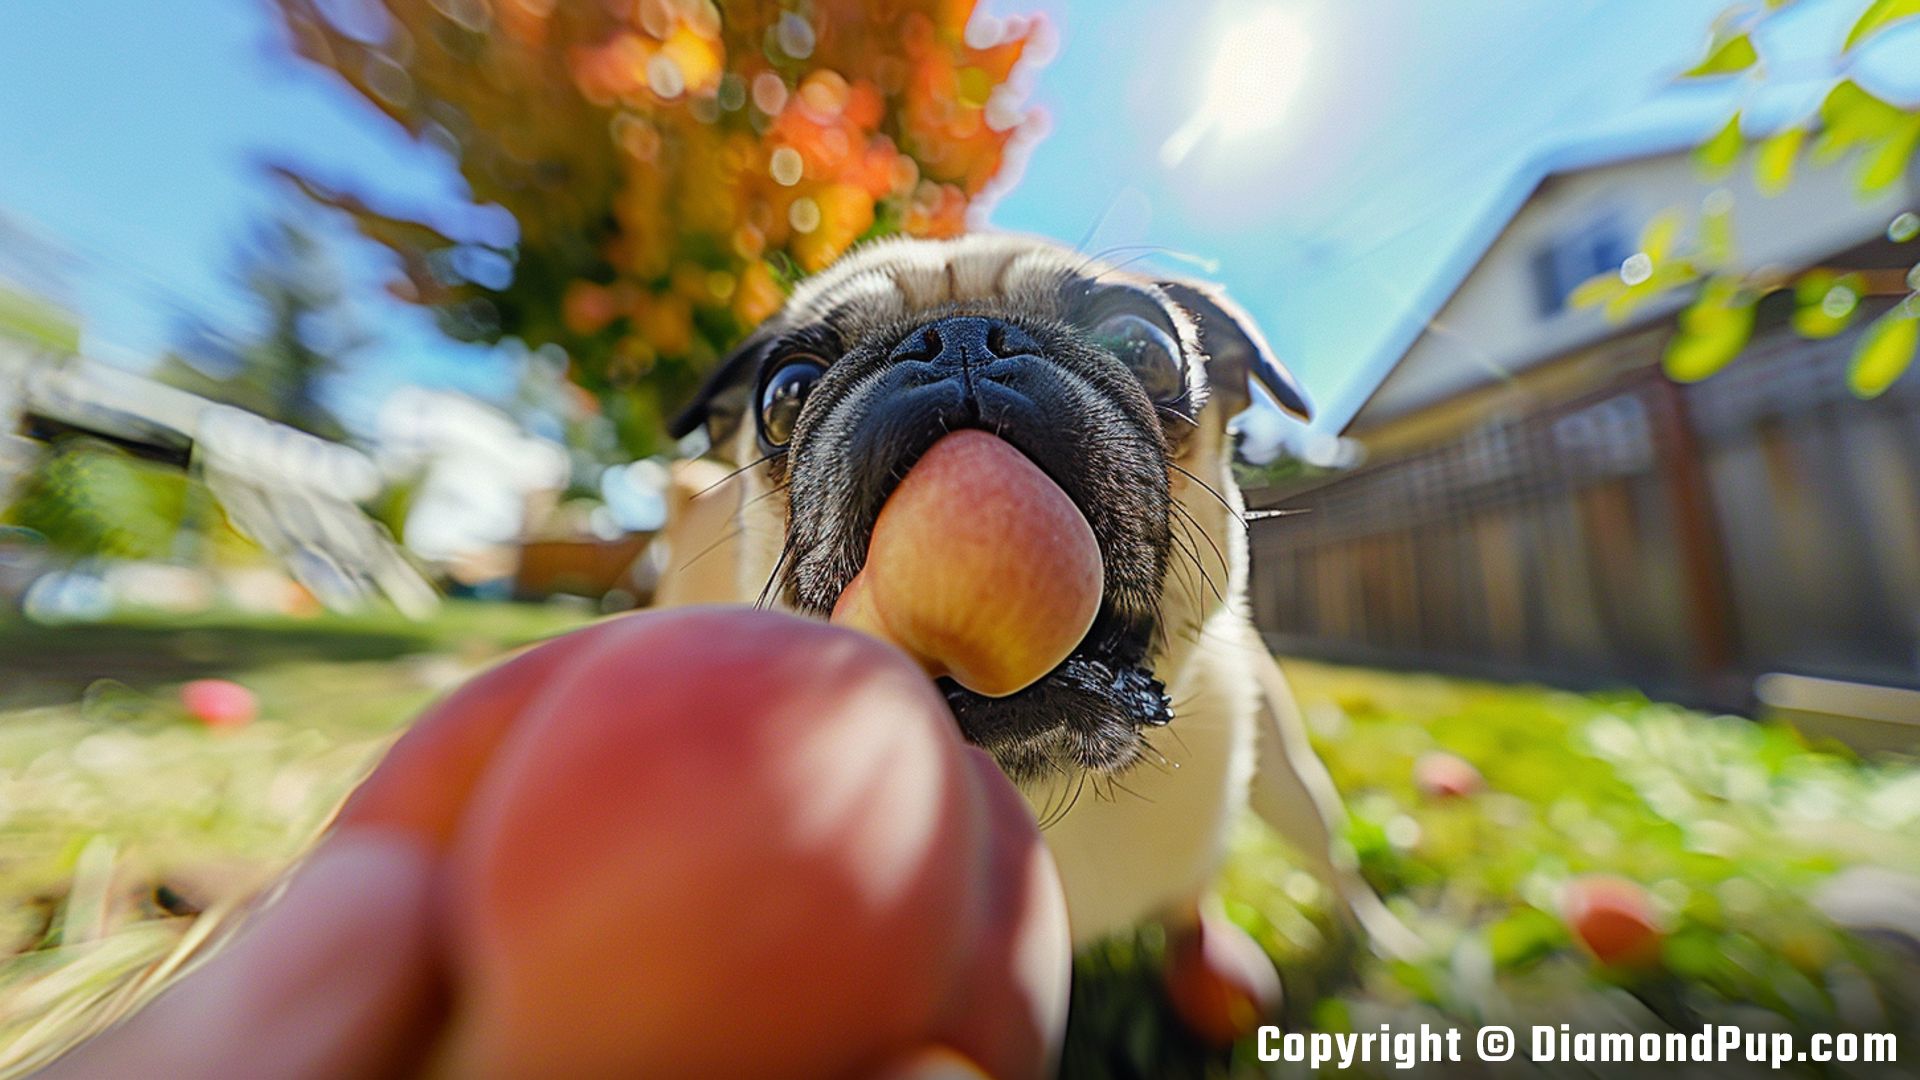 Image of a Cute Pug Eating Peaches